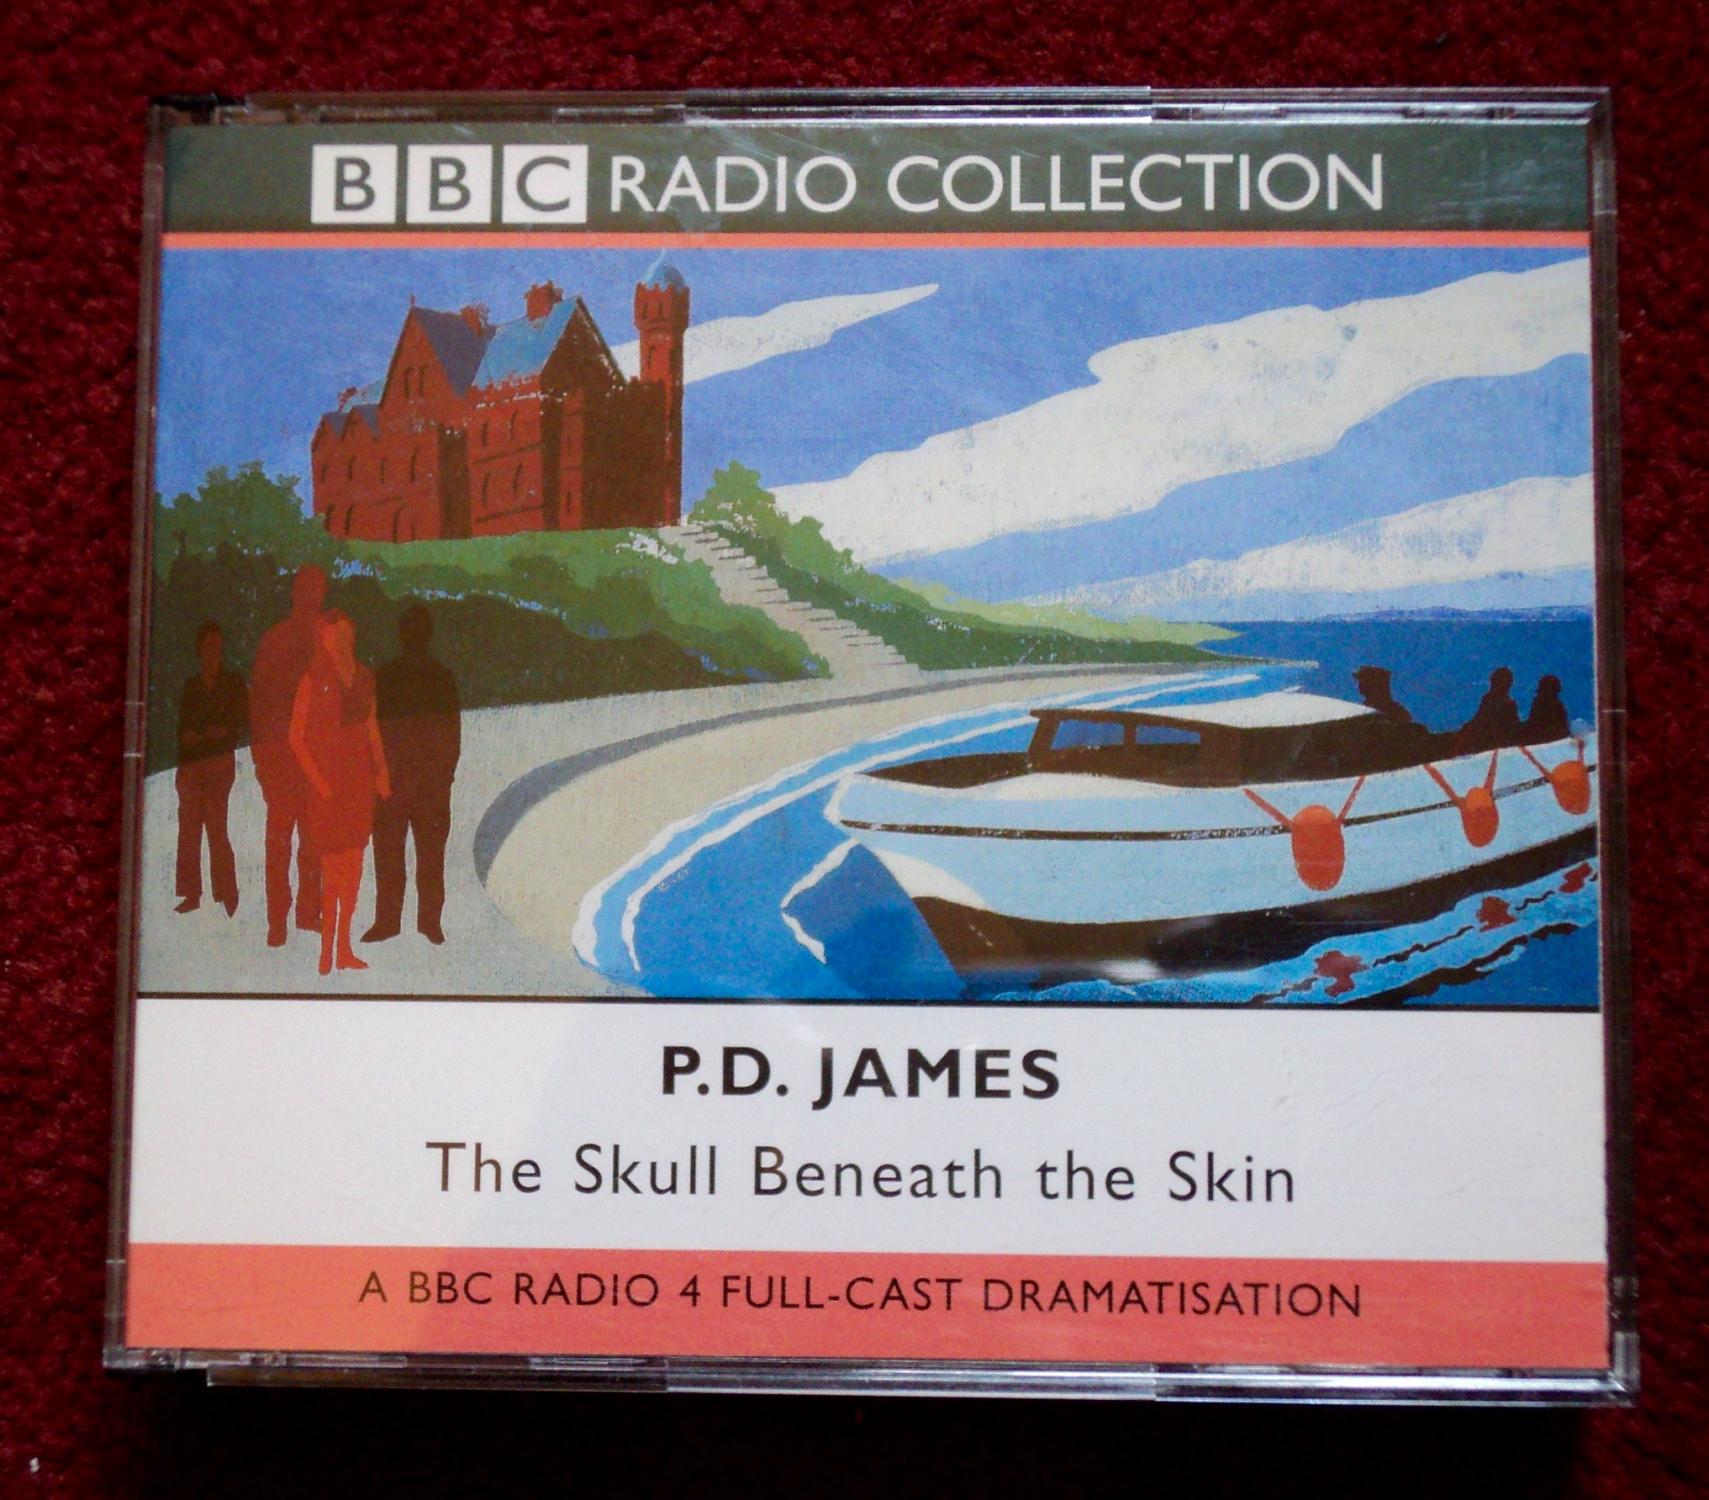 The Skull Beneath the Skin: BBC Radio 4 Full-cast Dramatisation (BBC Radio Collection) - P. D. James